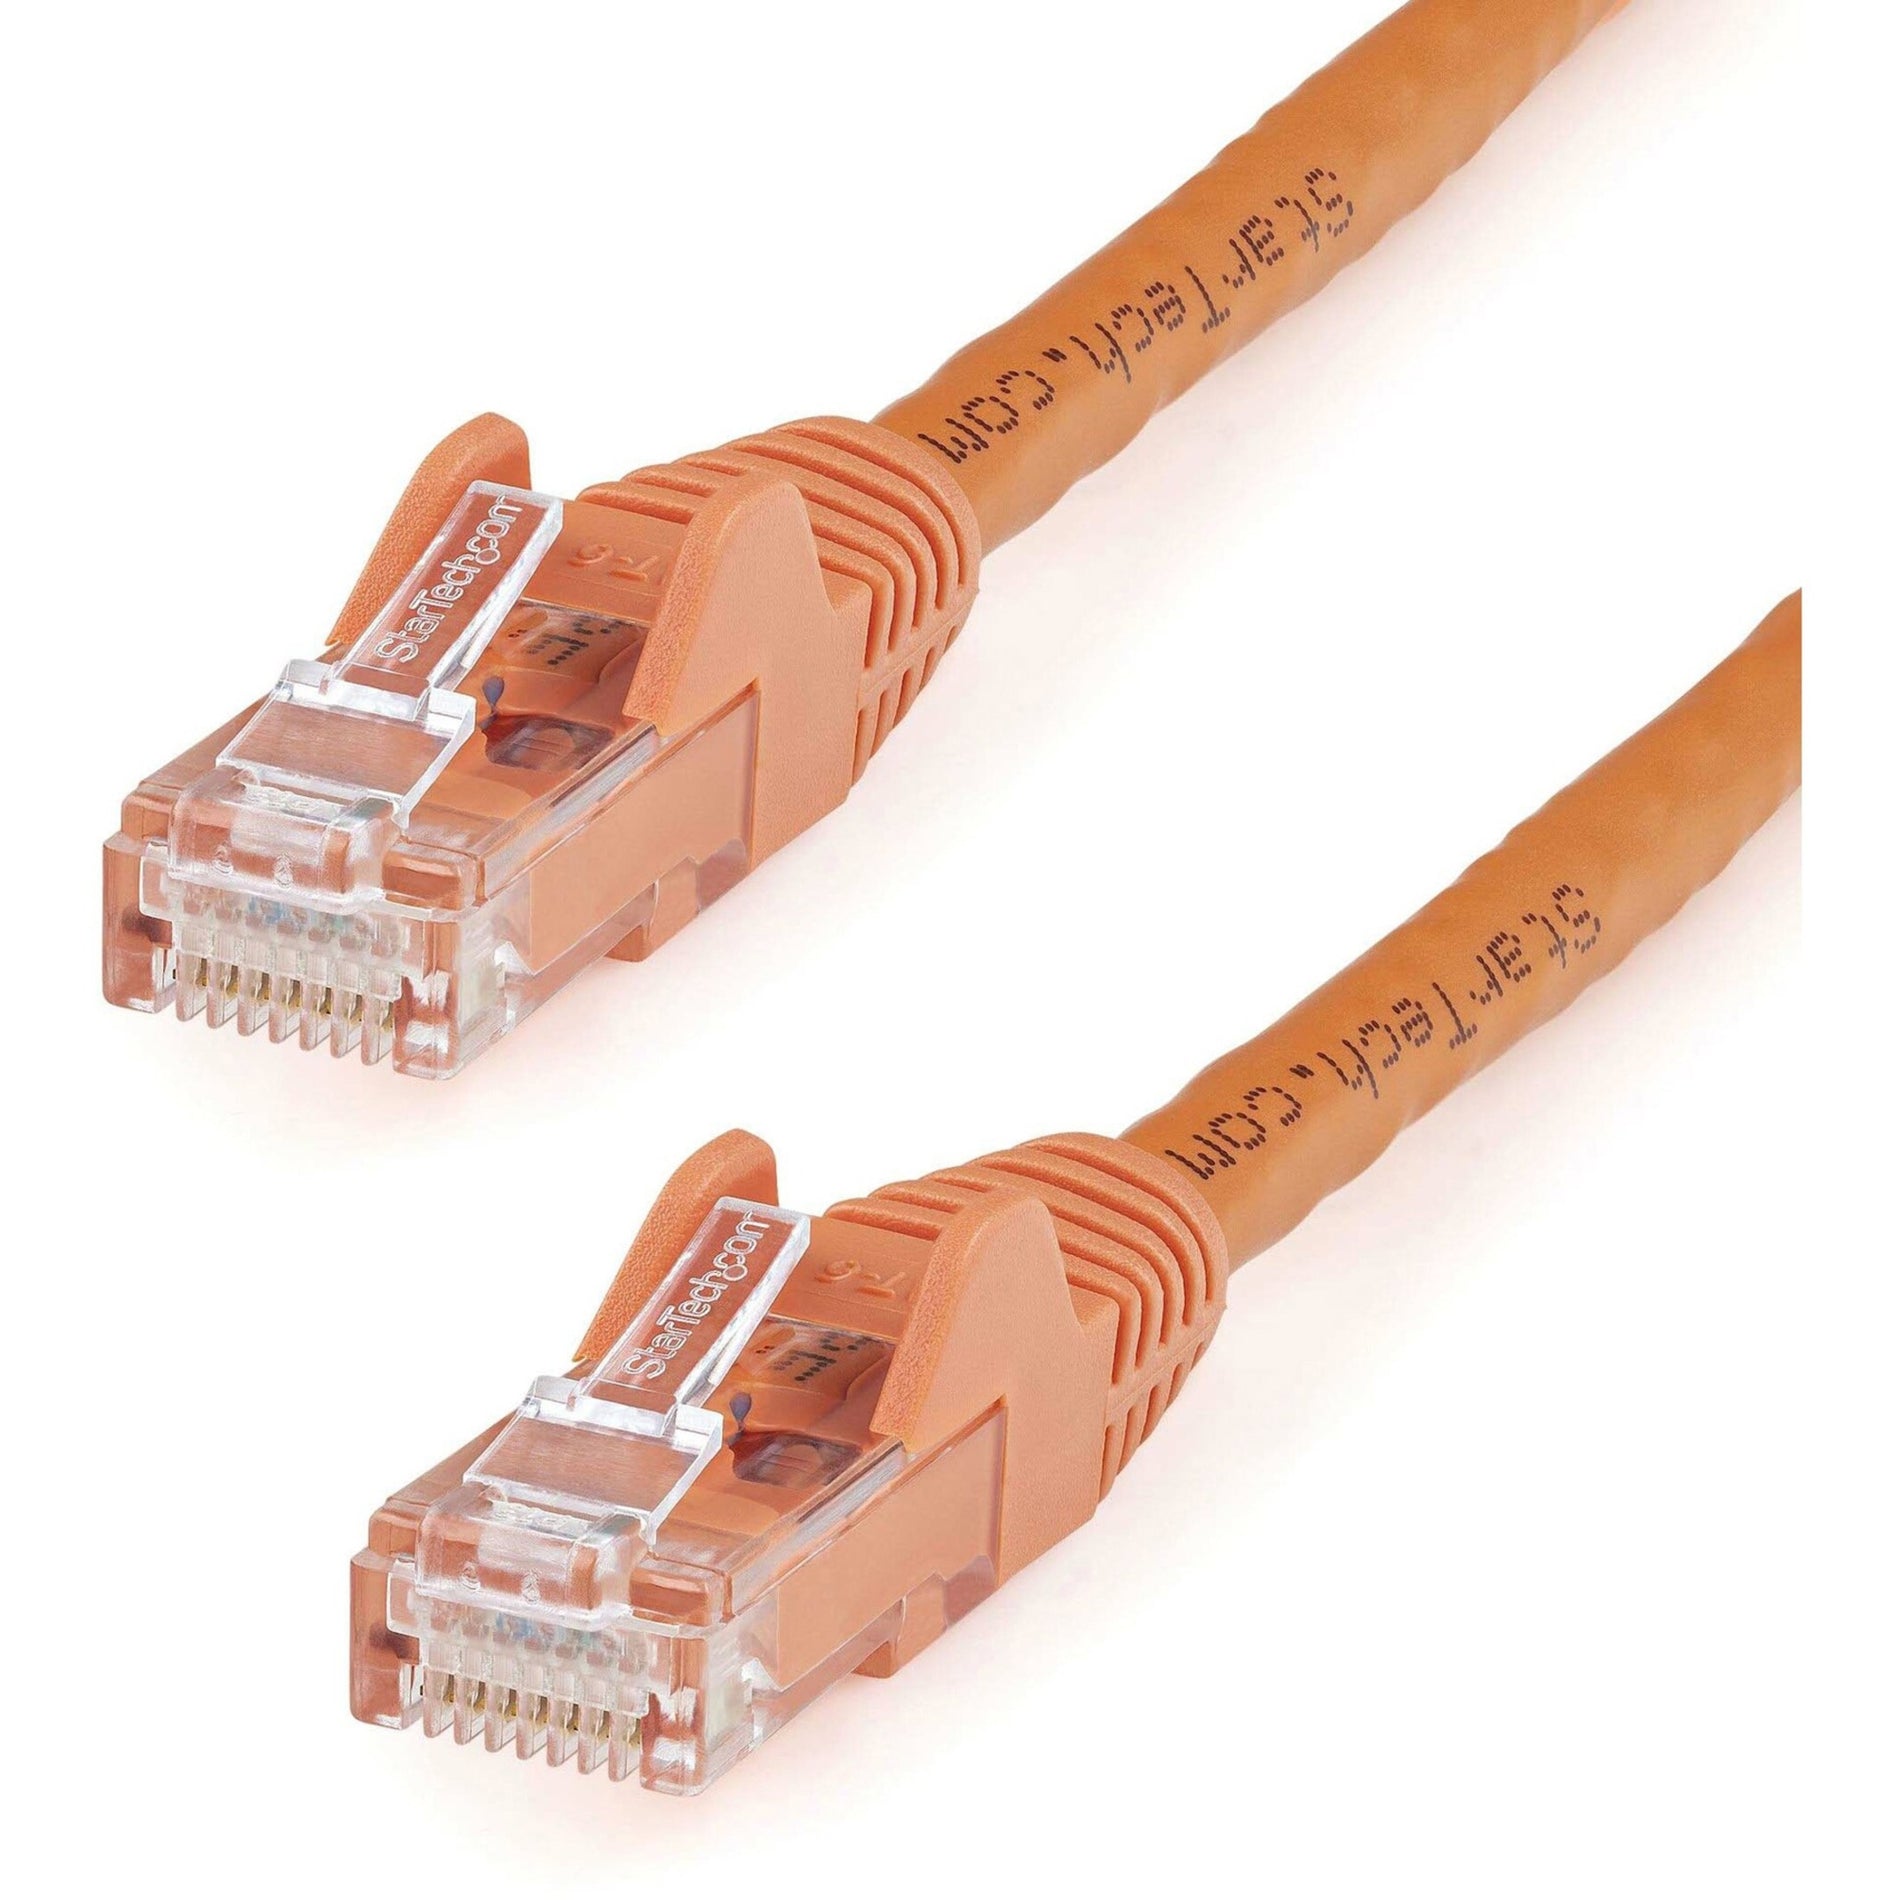 StarTech.com N6PATCH125OR Cat6 Patch Cable, 125ft Orange Ethernet Cable, Snagless RJ45 Connectors